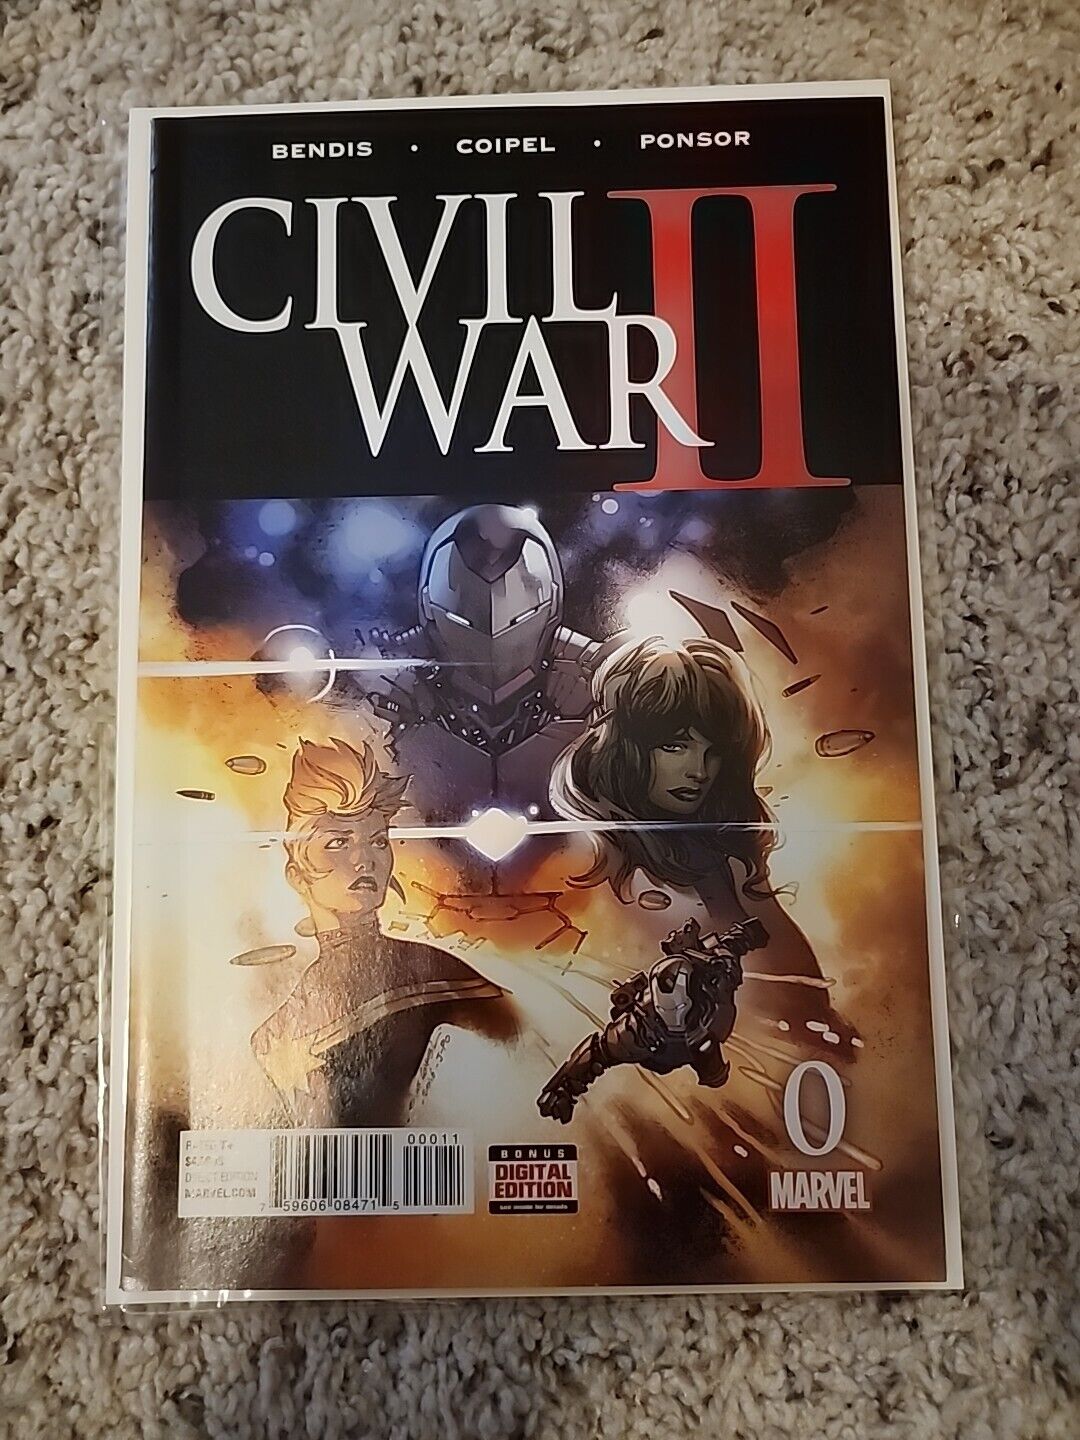 Civil War II #0 (Marvel Comics July 2016)